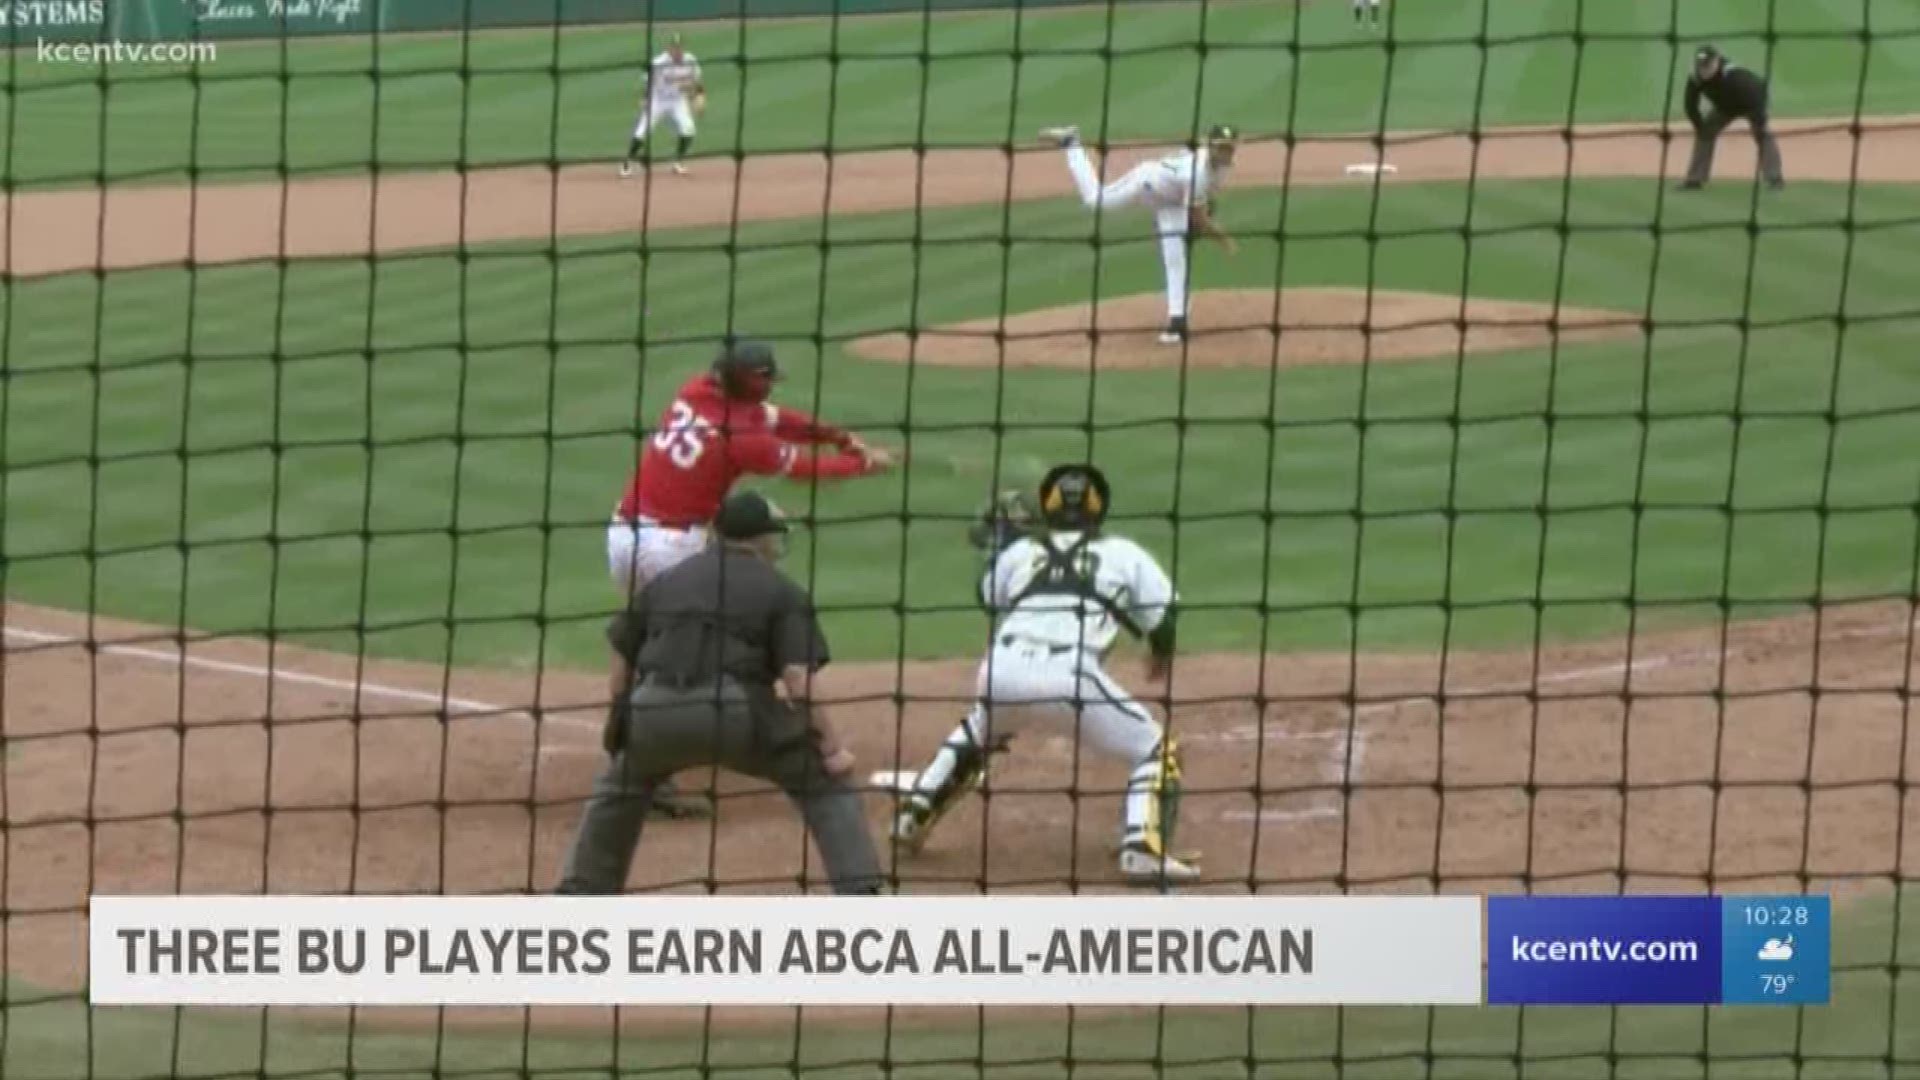 3 Baylor players earn ABCA All-American